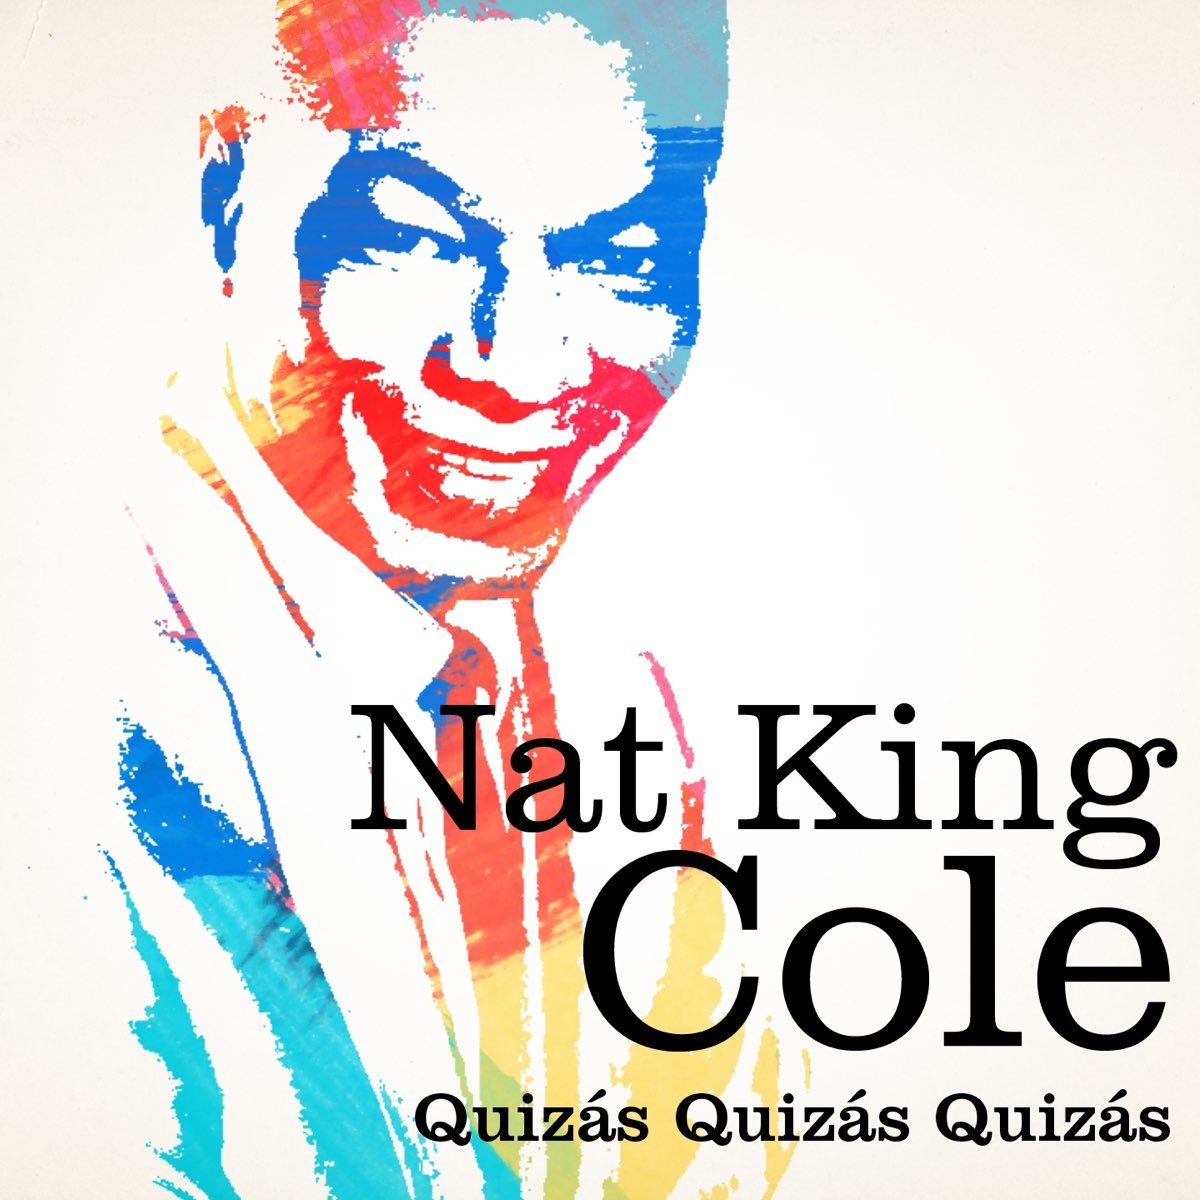 Нат ст. Nat King Cole обложка Greatest Hits. Nat King Cole Unforgettable. Nat King Cole - Unforgettable альбом. Quizas, quizas, quizas Remastered Nat King Cole.